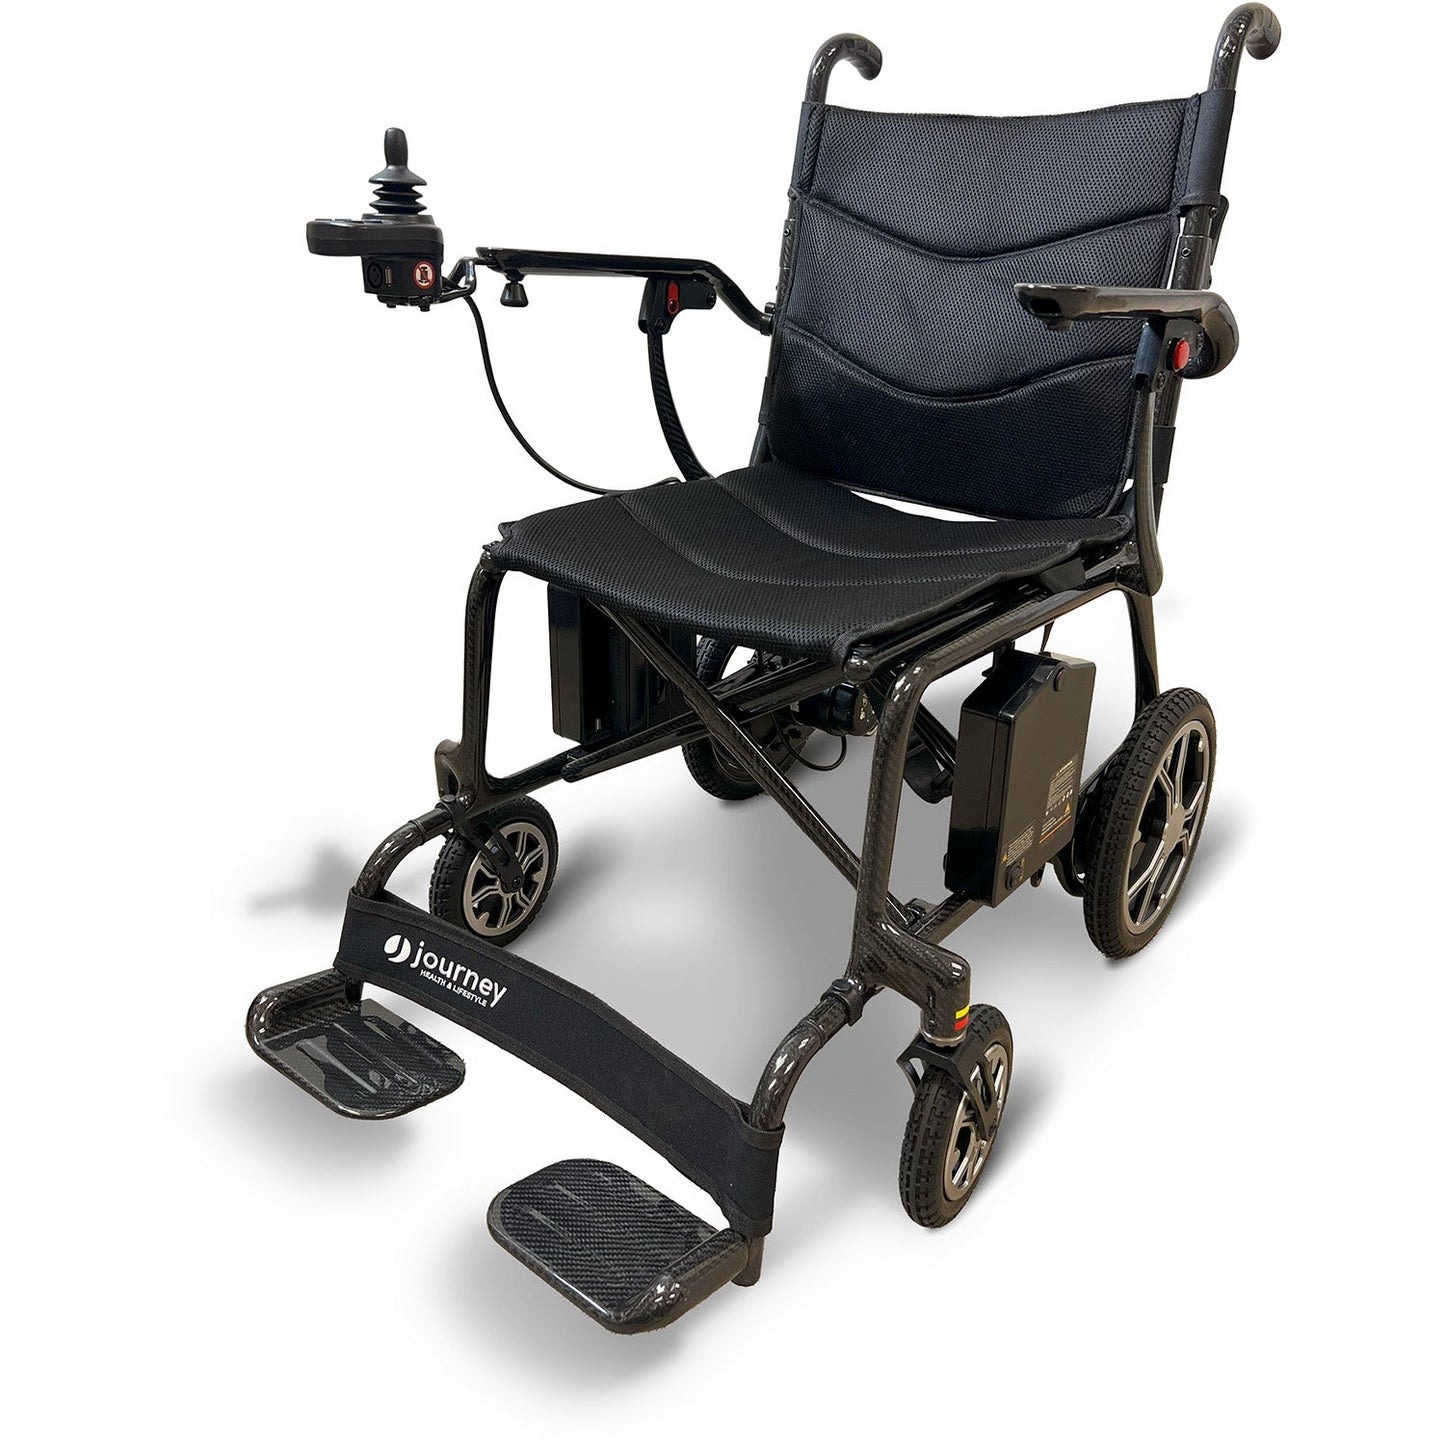 Journey Health Air Elite Lightweight Folding Power Wheelchair-My Perfect Scooter